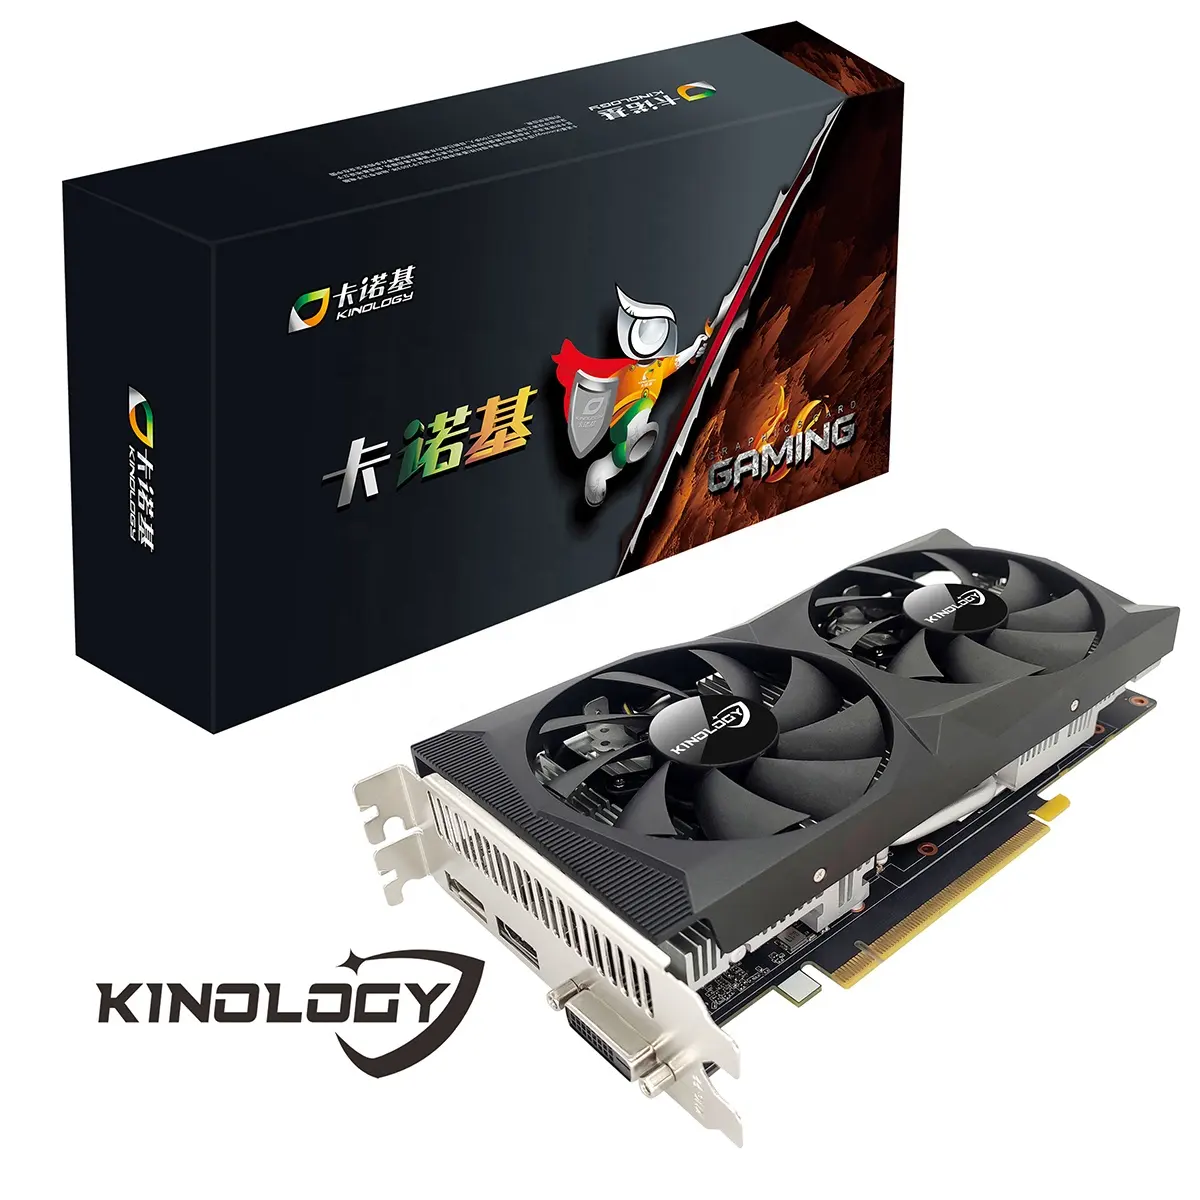 Kinology GTX2060 Super 8 GB GPU VGA Video Graphics Card 2060S GTX2060S Geforce GTX 2060 Super 2060S 8GB